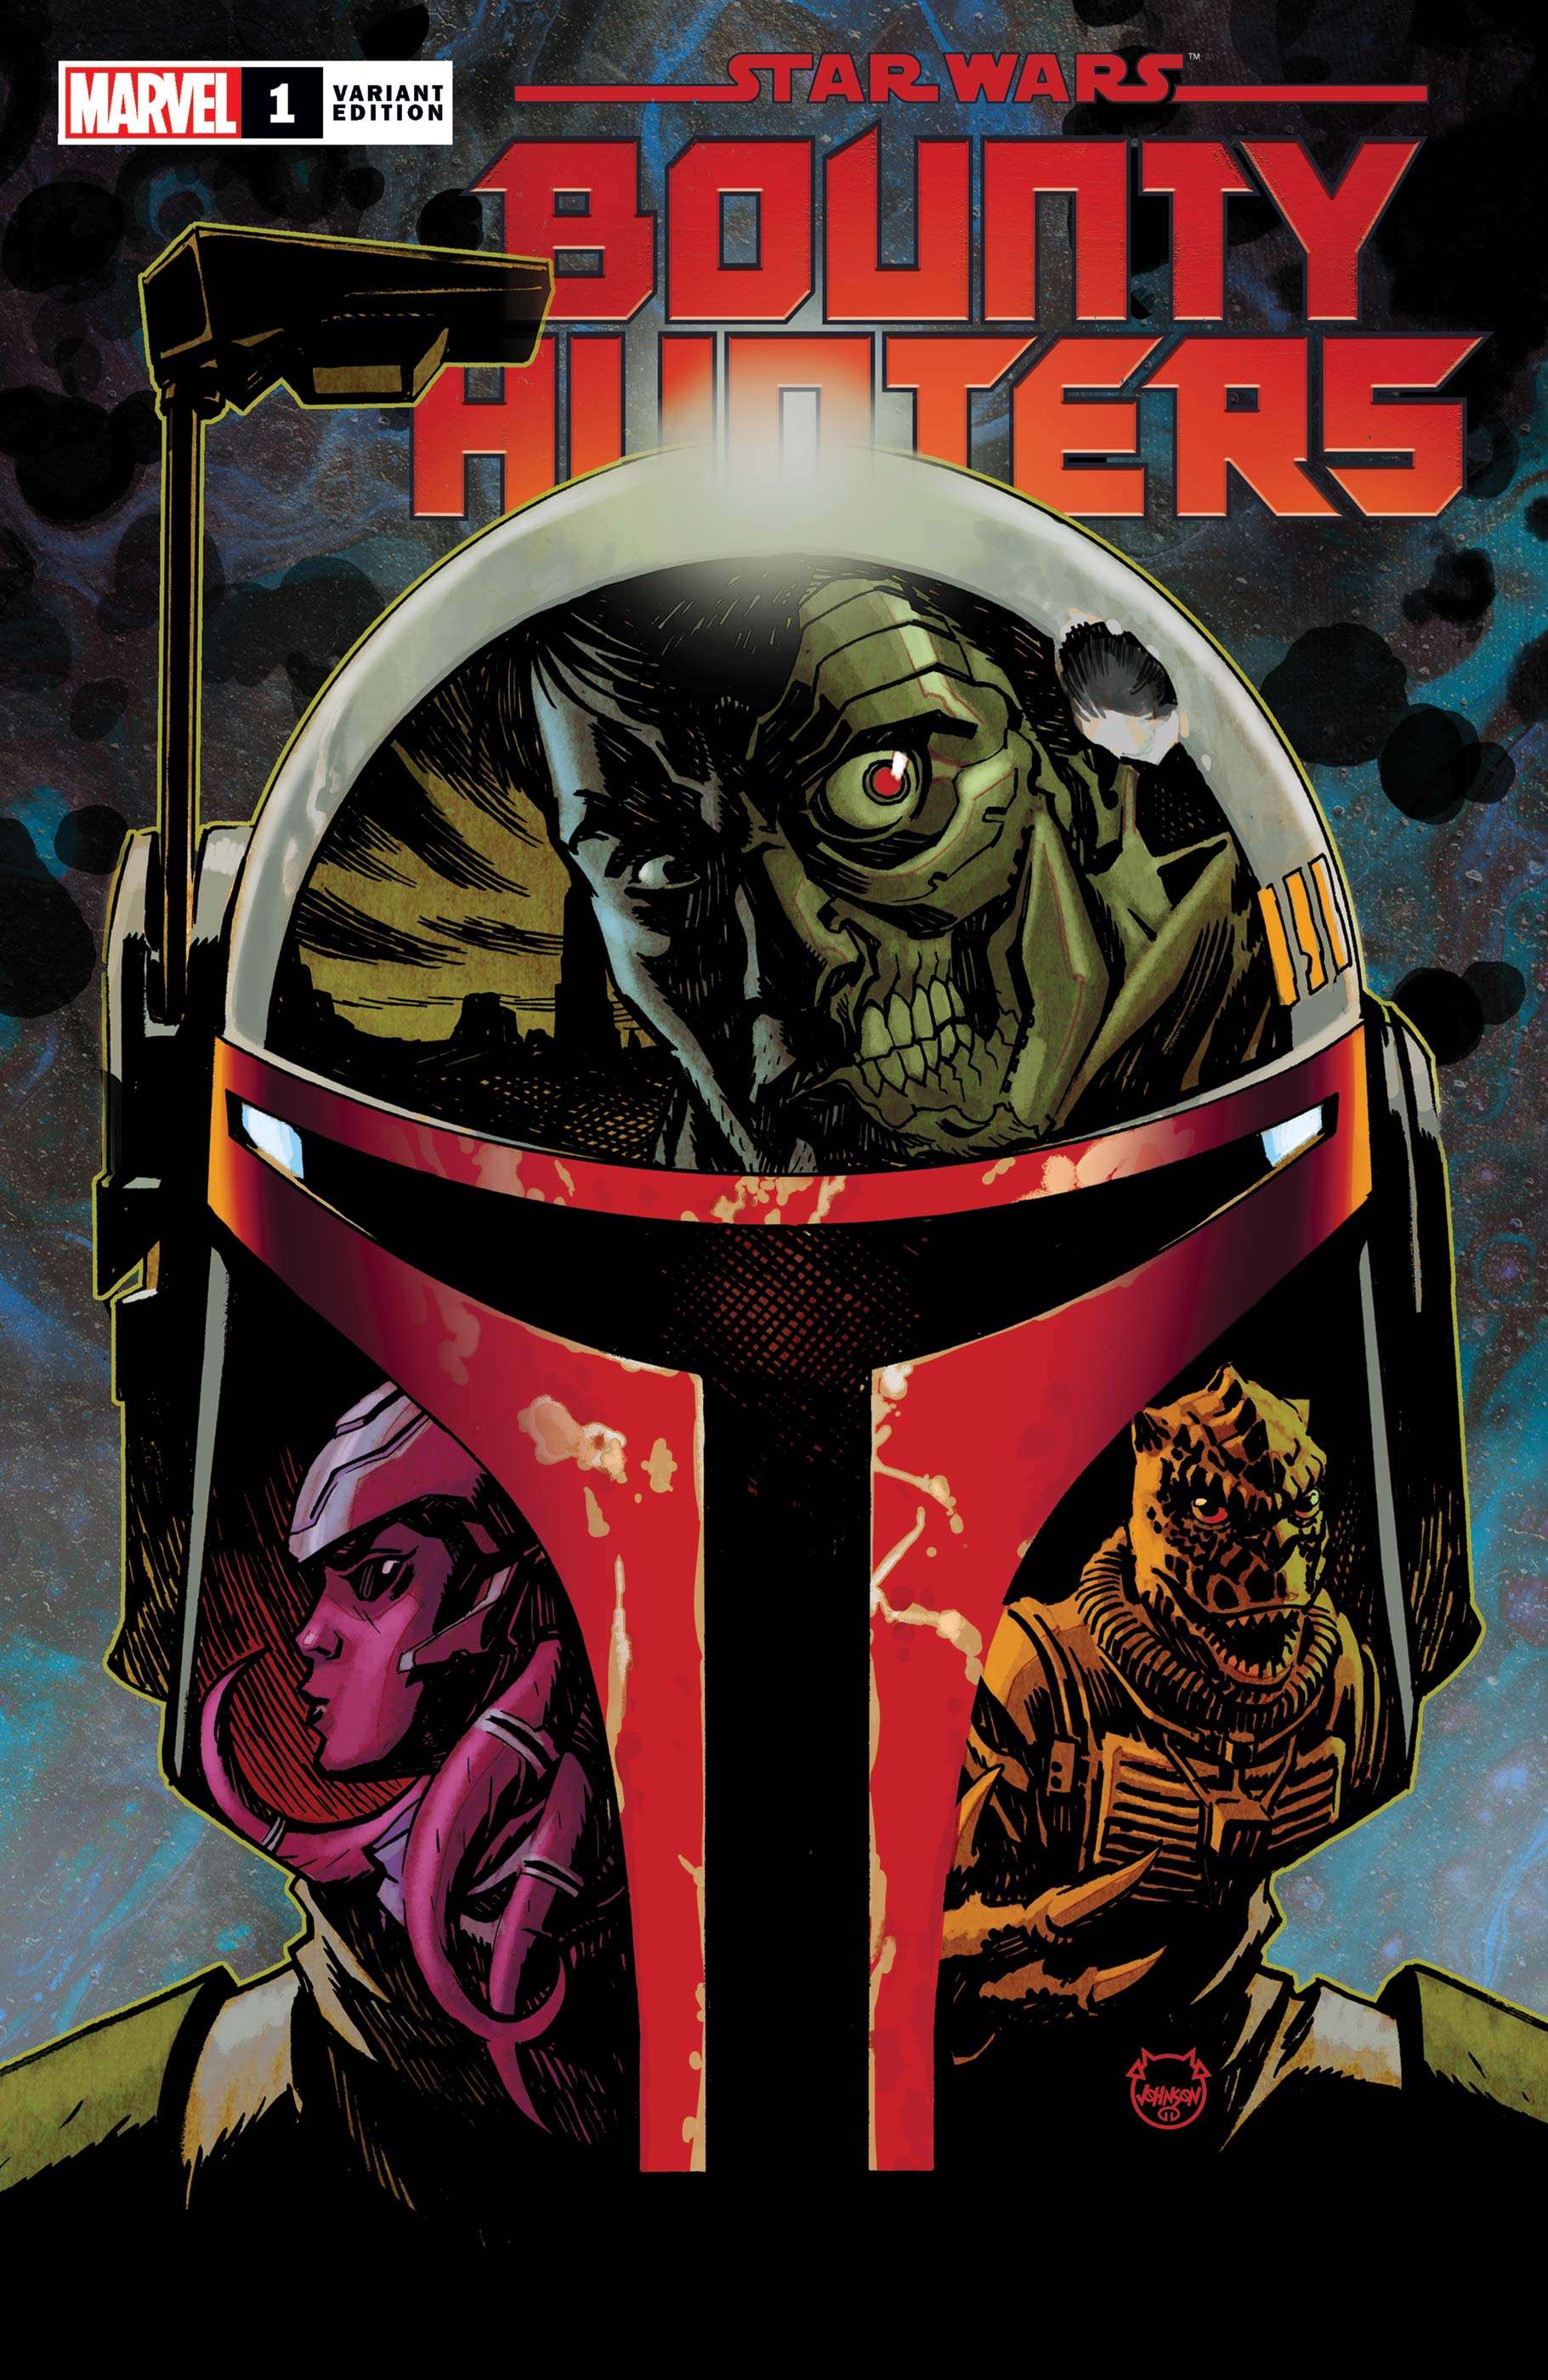 Star Wars: Bounty Hunters (2020) #1 (Variant)